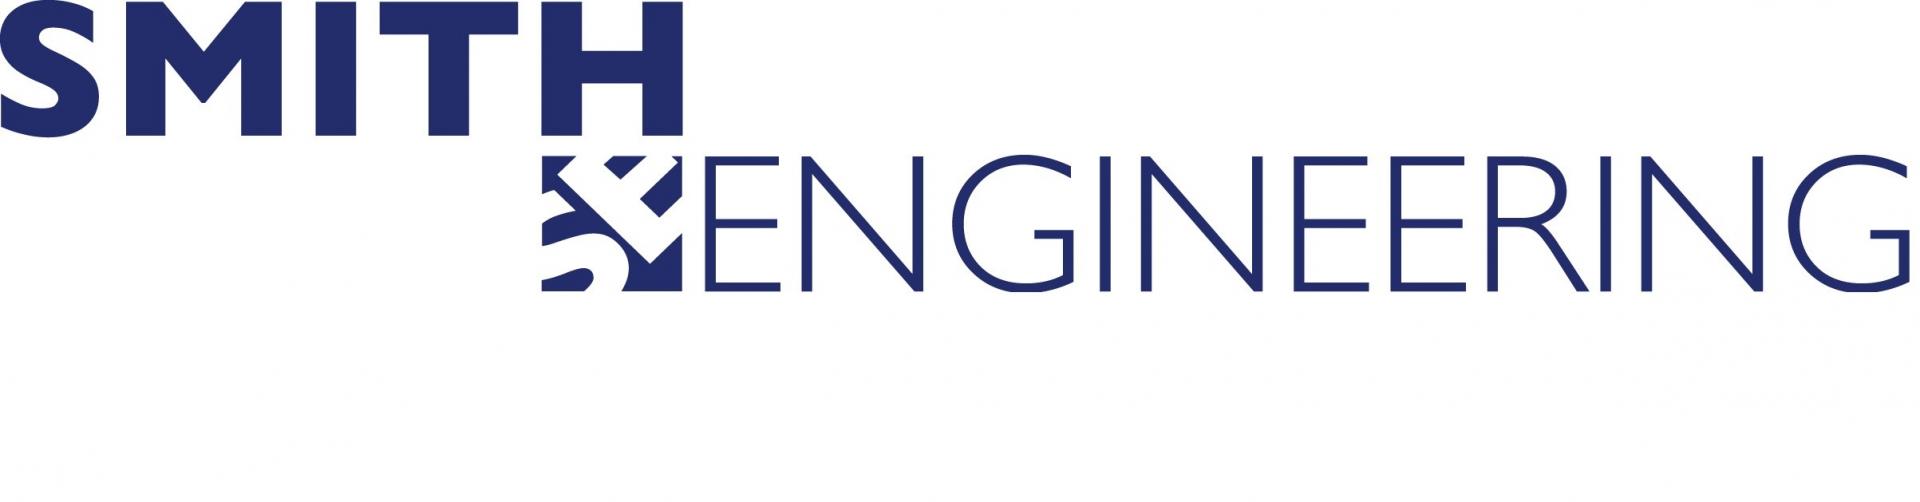 Smith Engineering logo